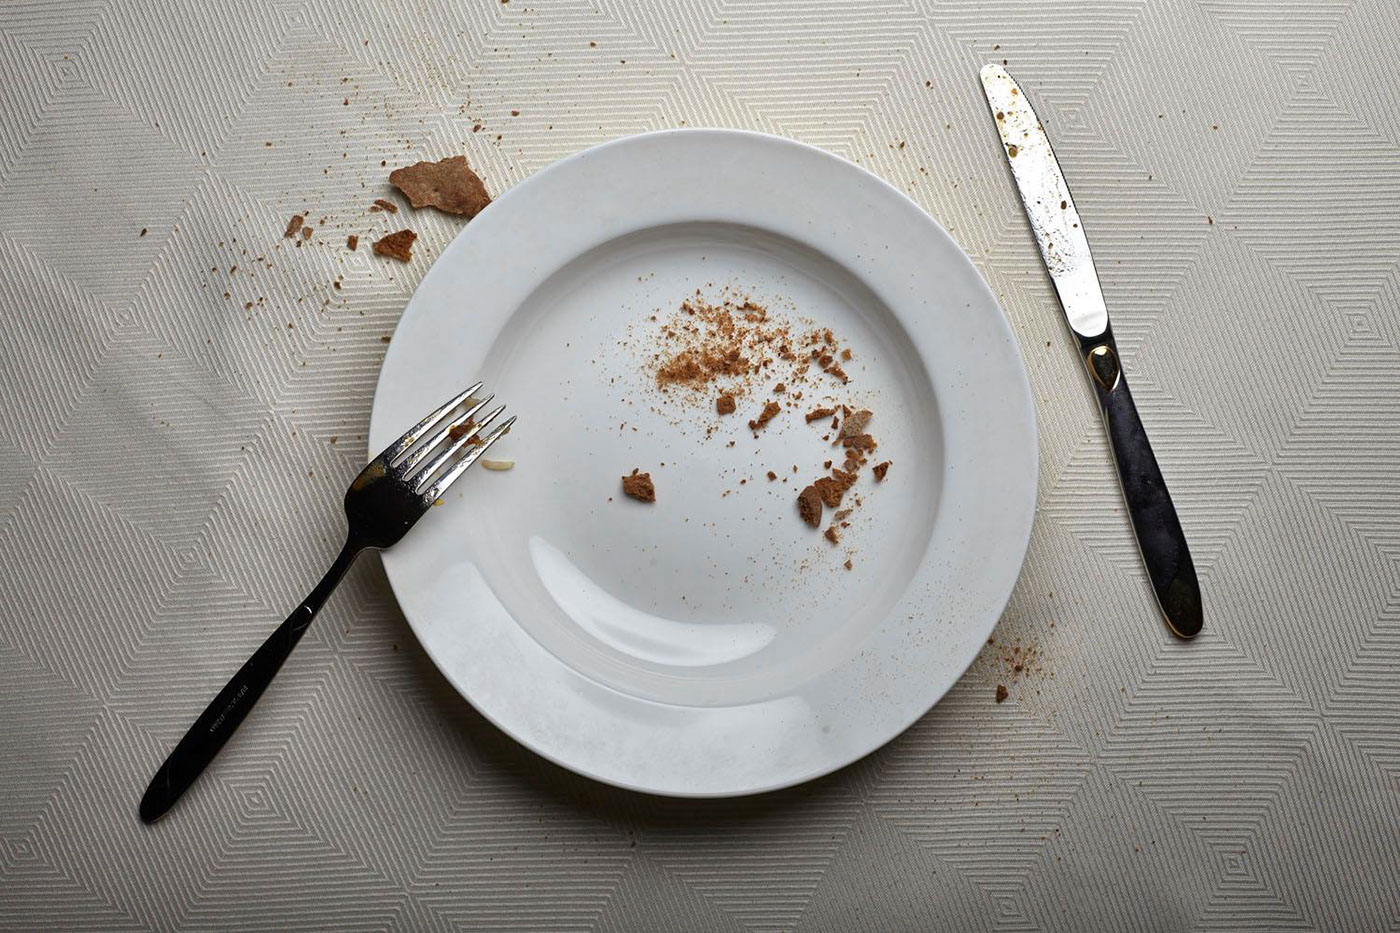 hunger plate leftover wfp un art Food  United Nations world food program India Syria africa refugee